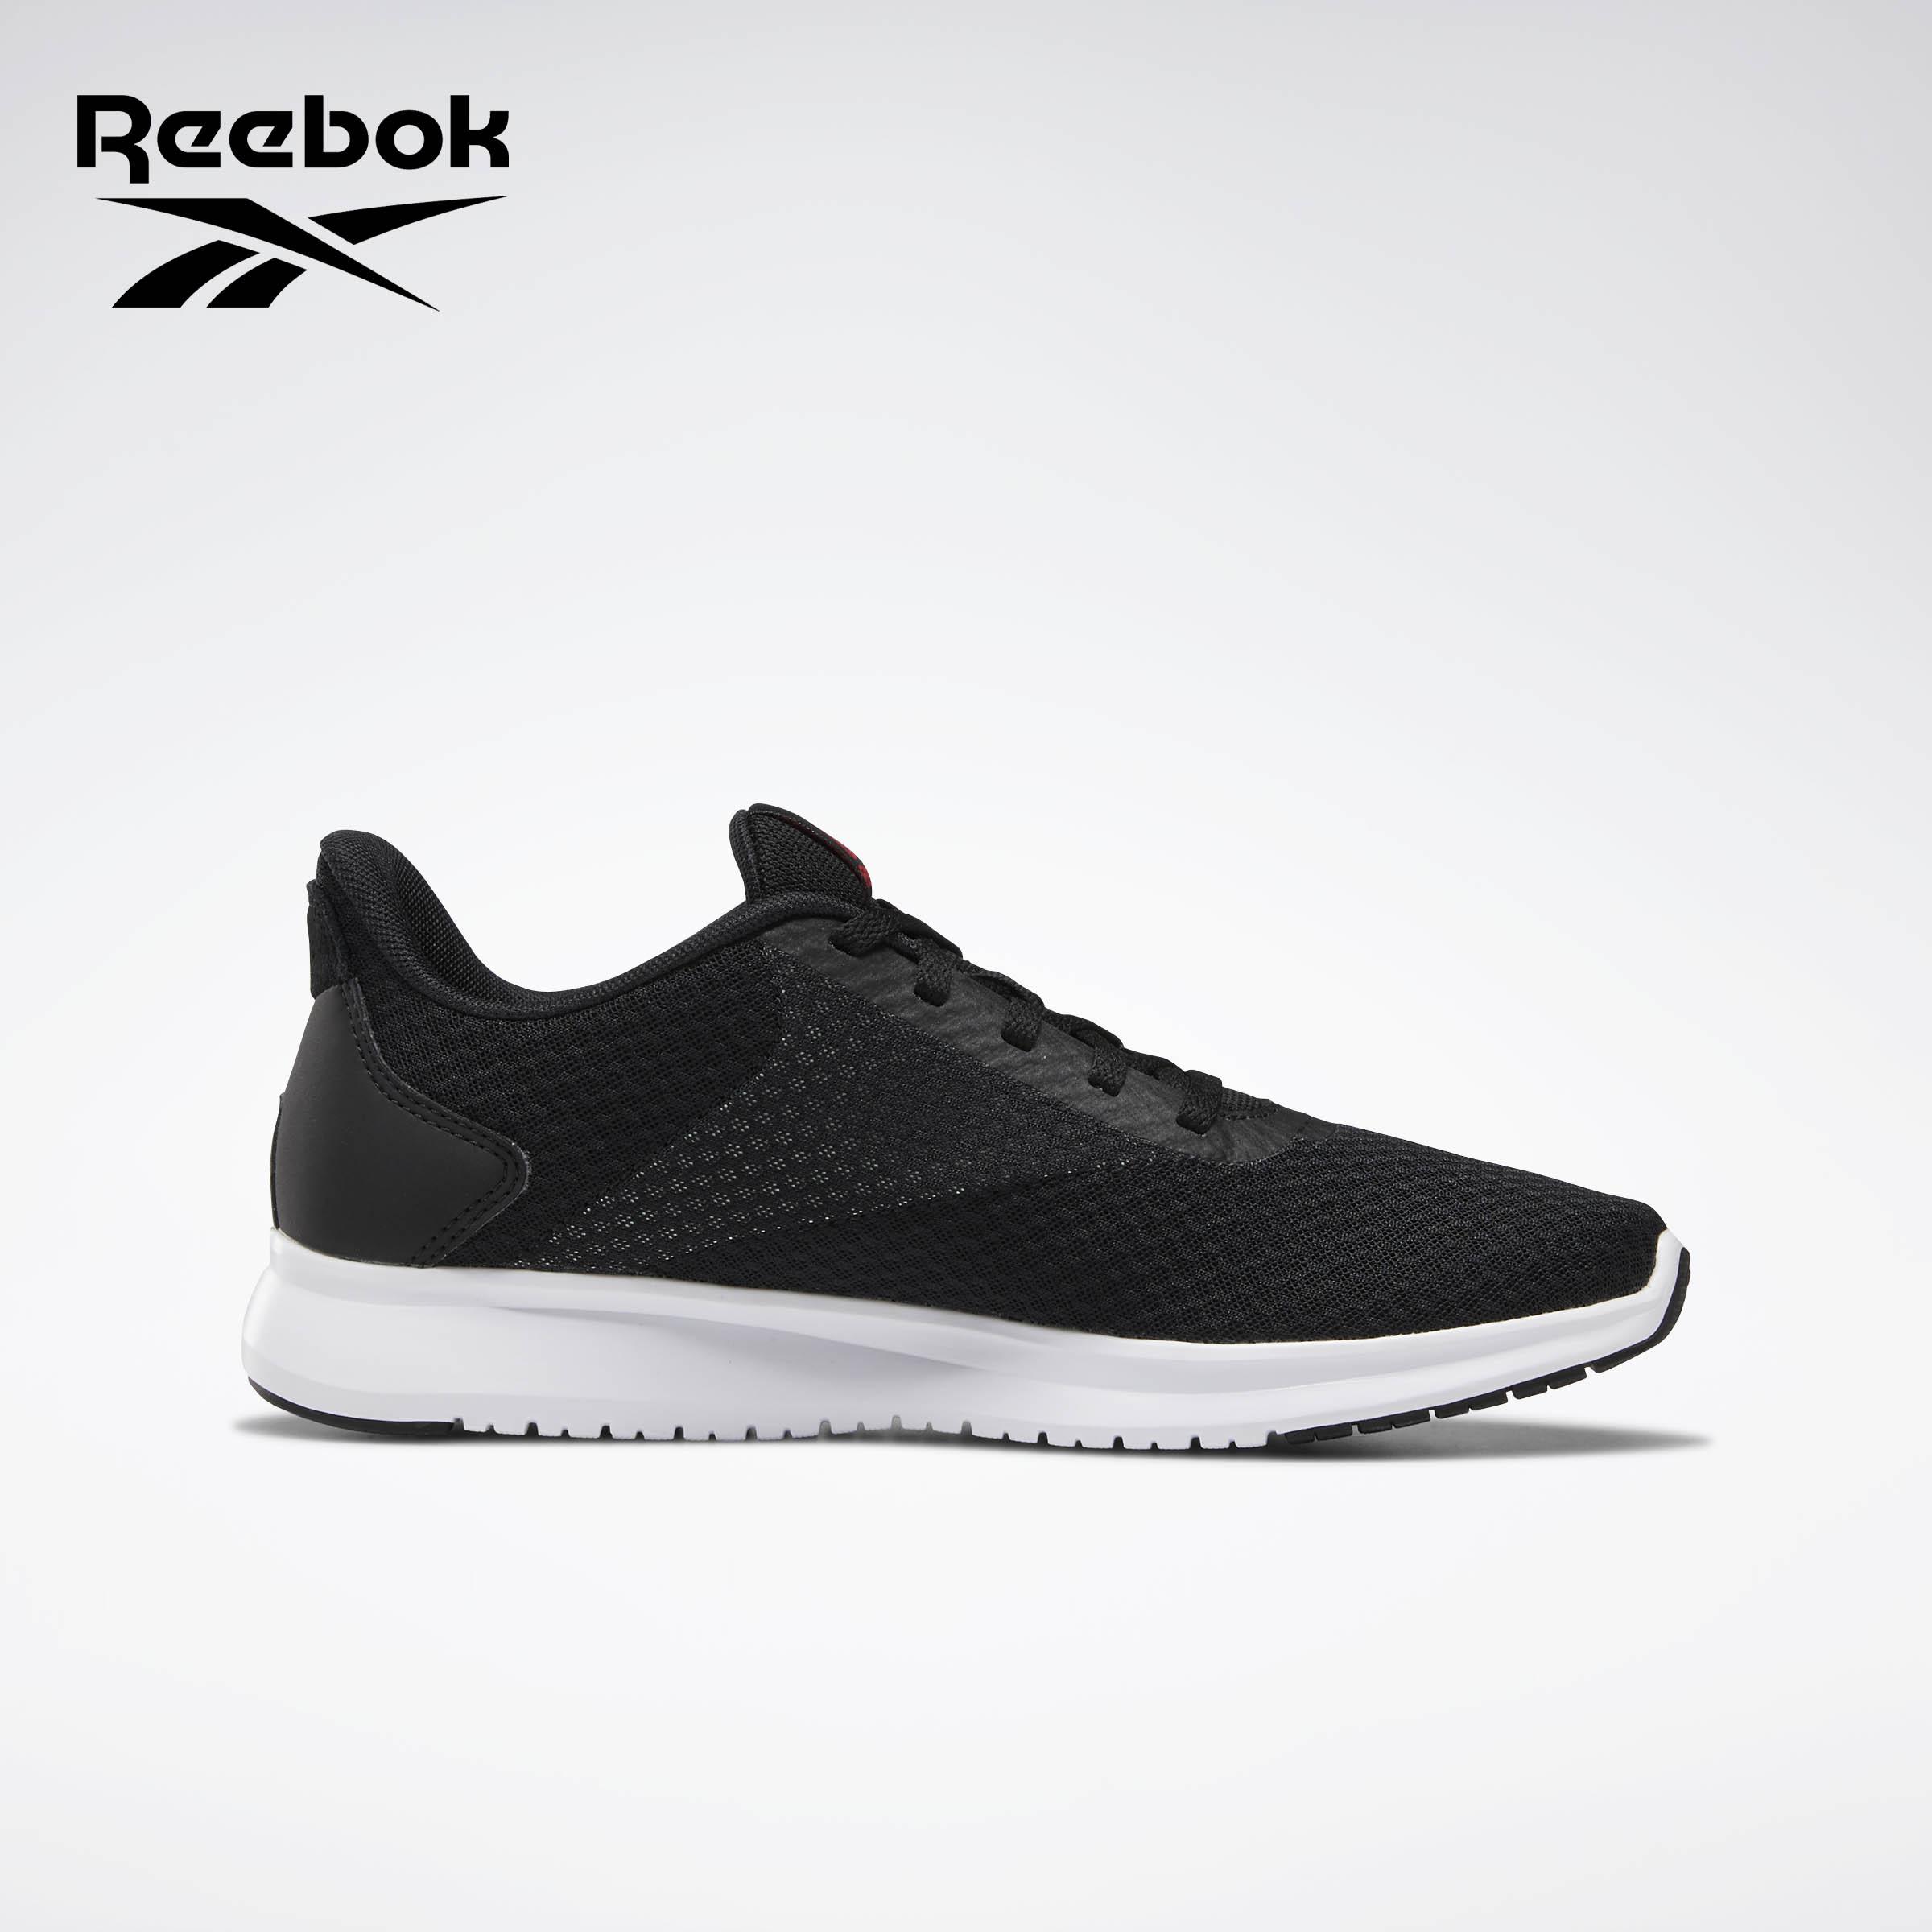 reebok shoes deals online